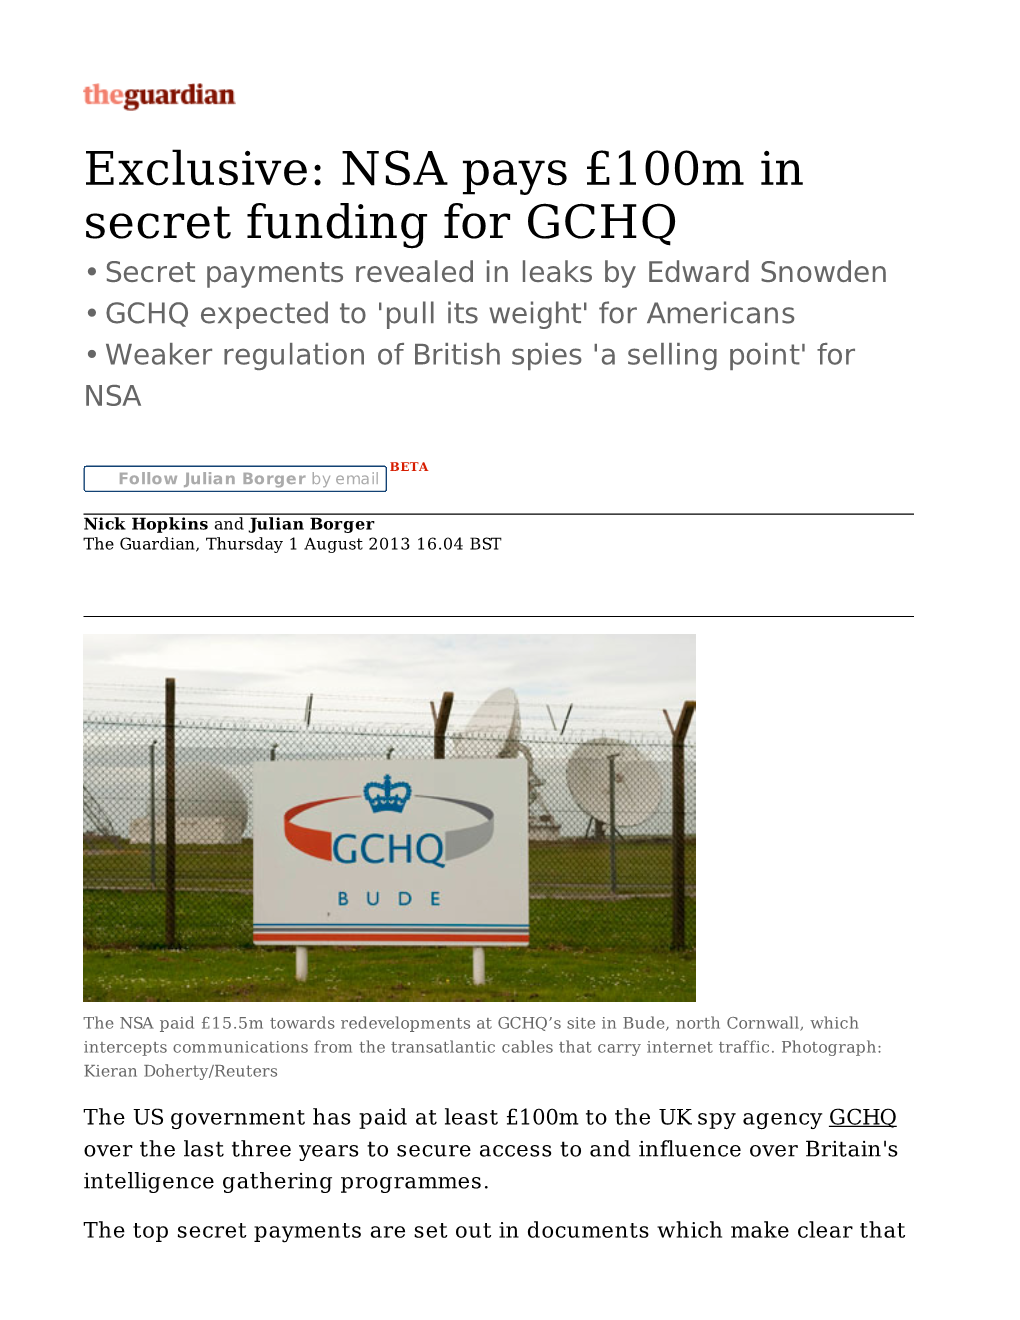 NSA Pays £100M in Secret Funding for GCHQ